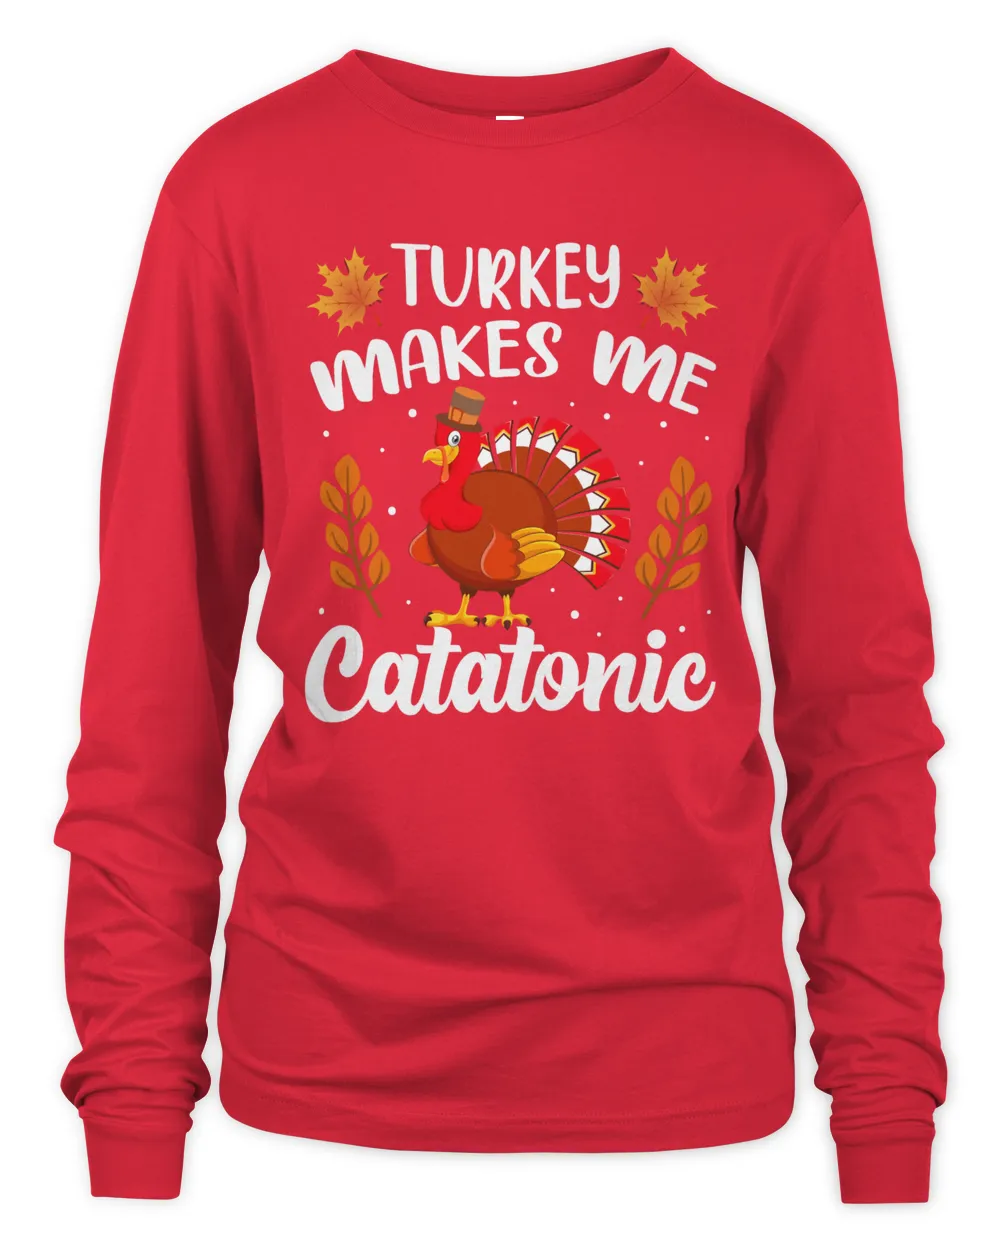 Turkey makes me catatonic